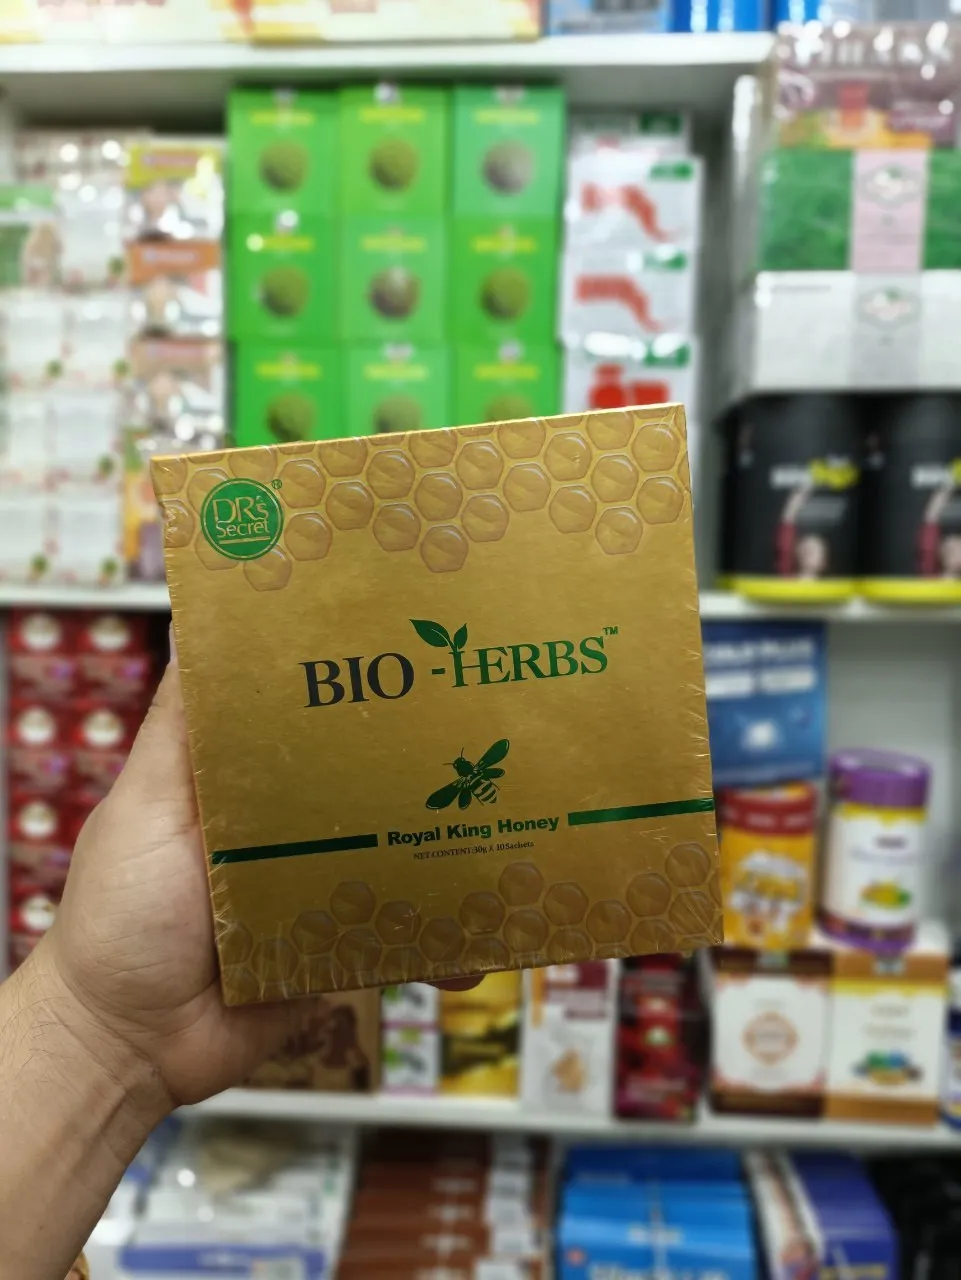 Королевский мед Royal King Honey Bio-Herbs (Dr's Secret)#2